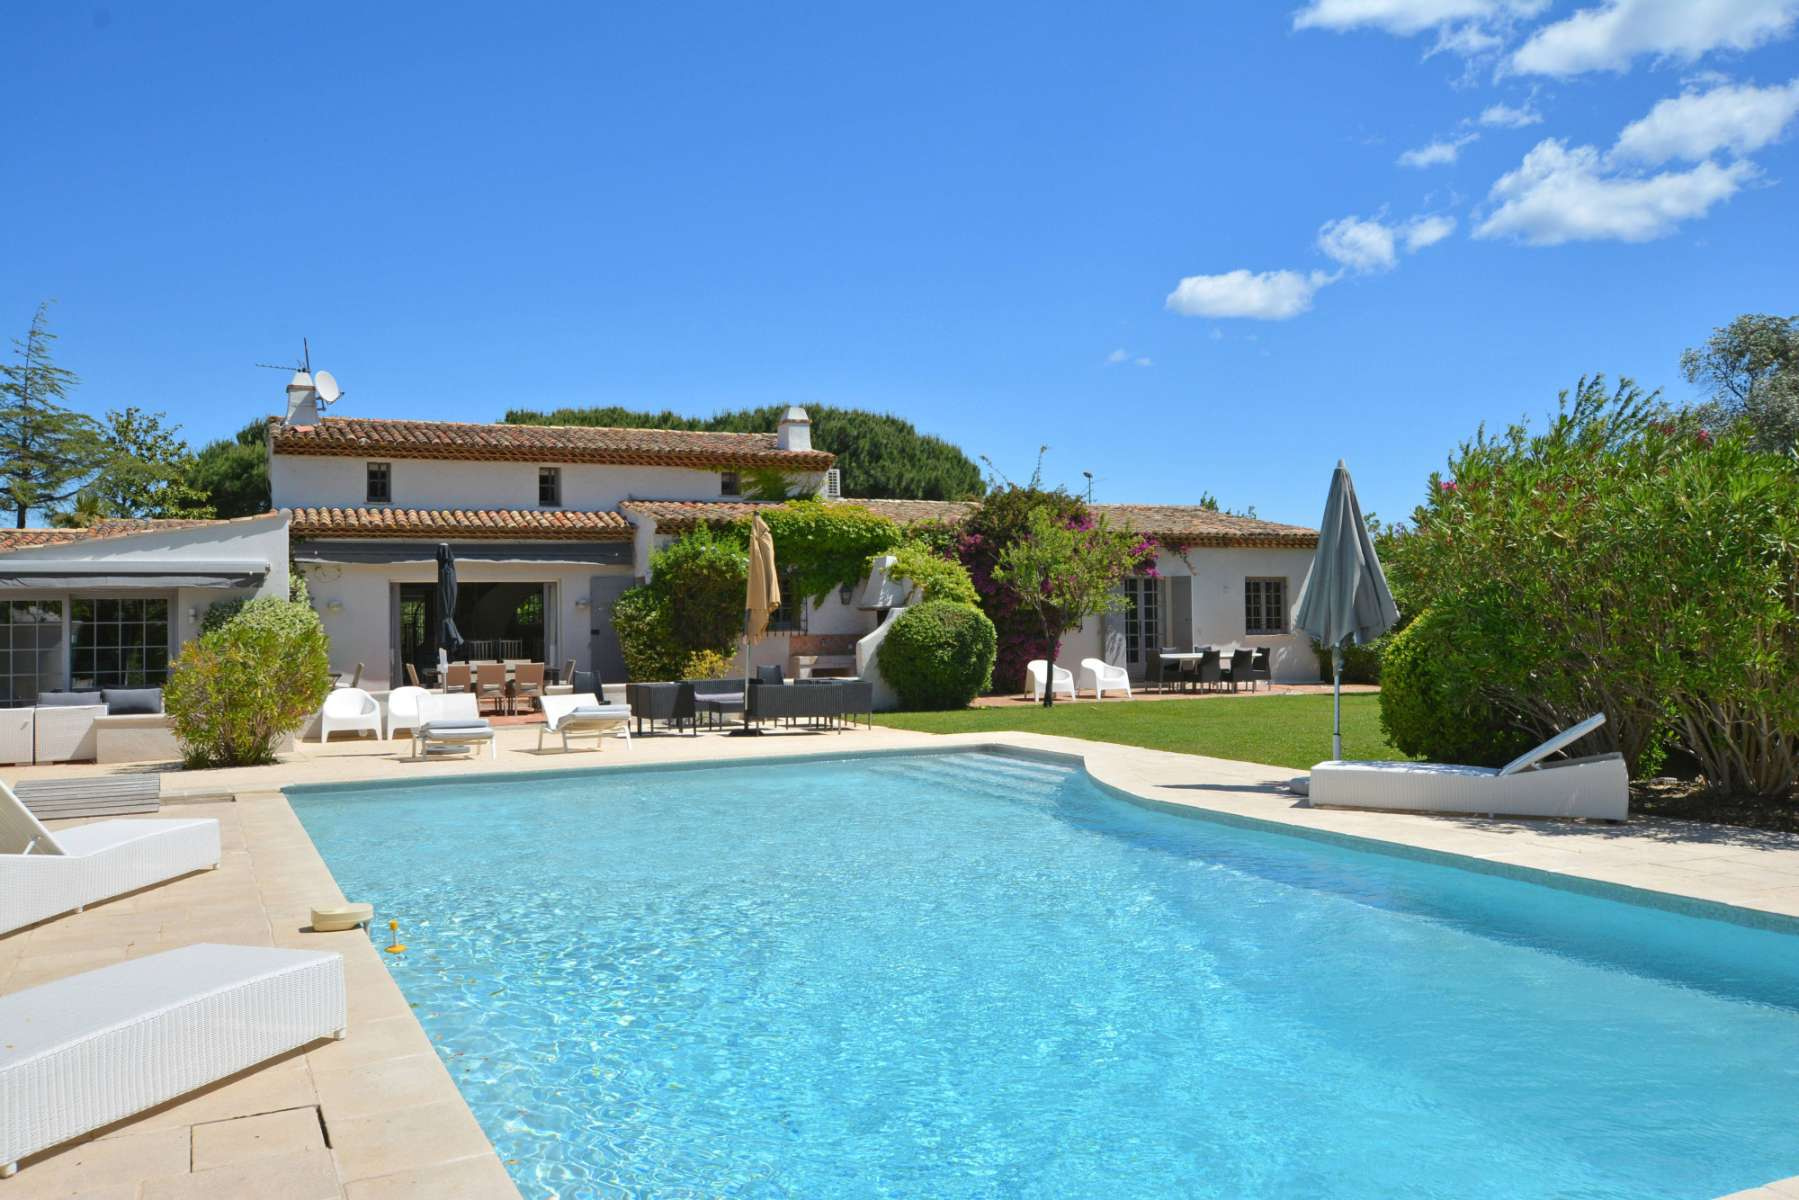 Rent villa in Les Salins area in Saint Tropez